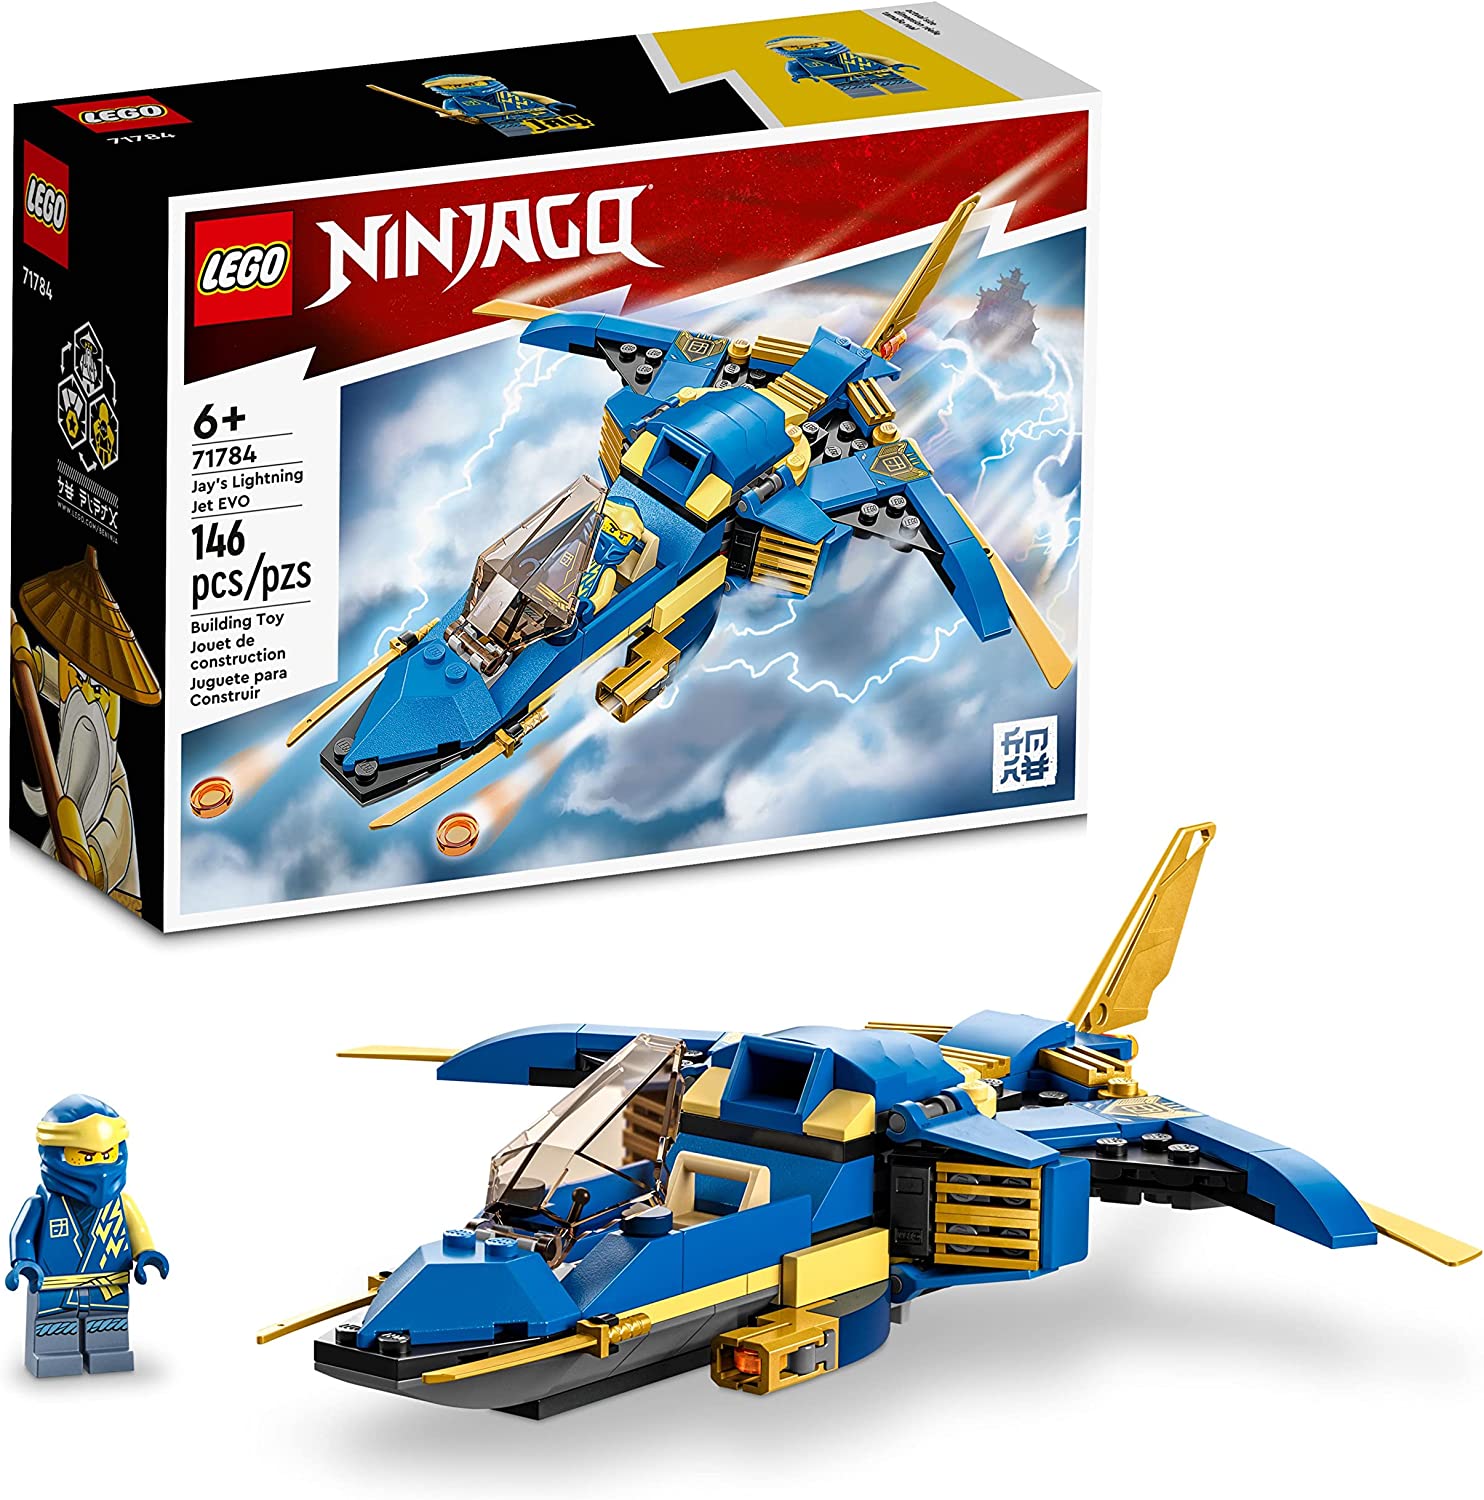 LEGO Ninjago Jay’s Lightning Jet EVO 71784 - LEGO, LEGO Ninjago